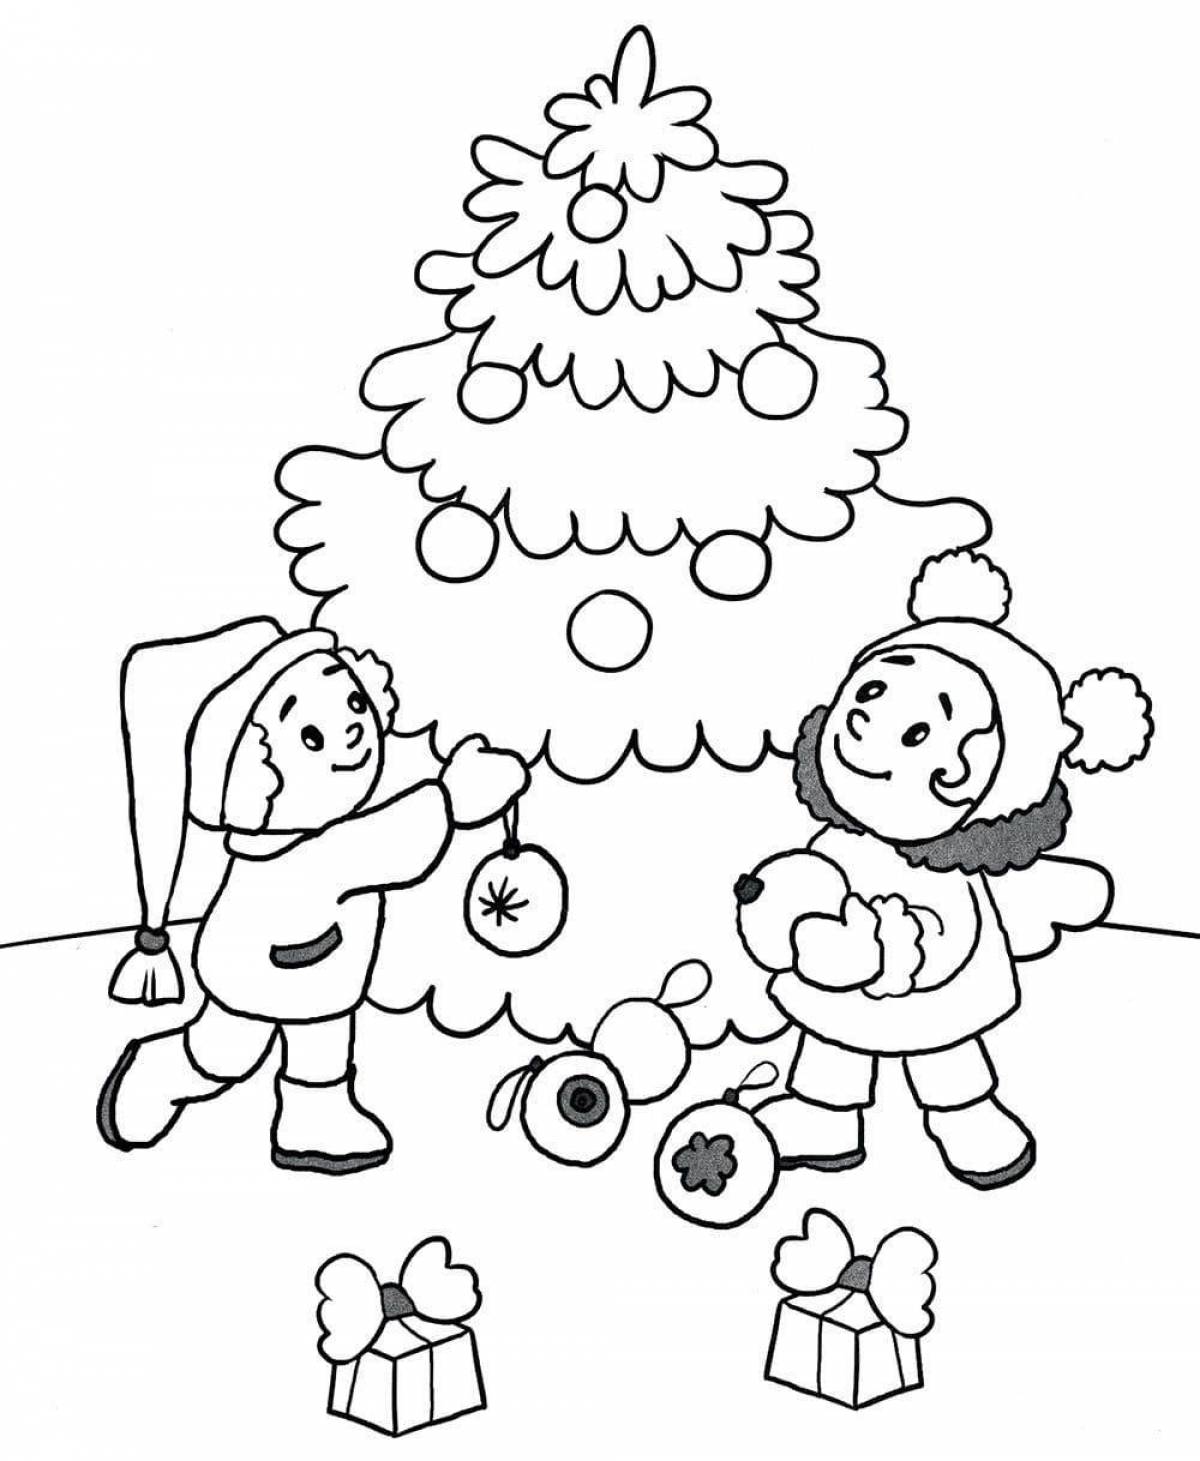 Rampant Christmas tree coloring page